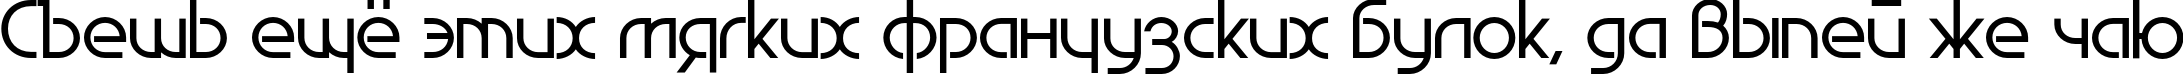 Пример написания шрифтом EdgeLine Bold текста на русском